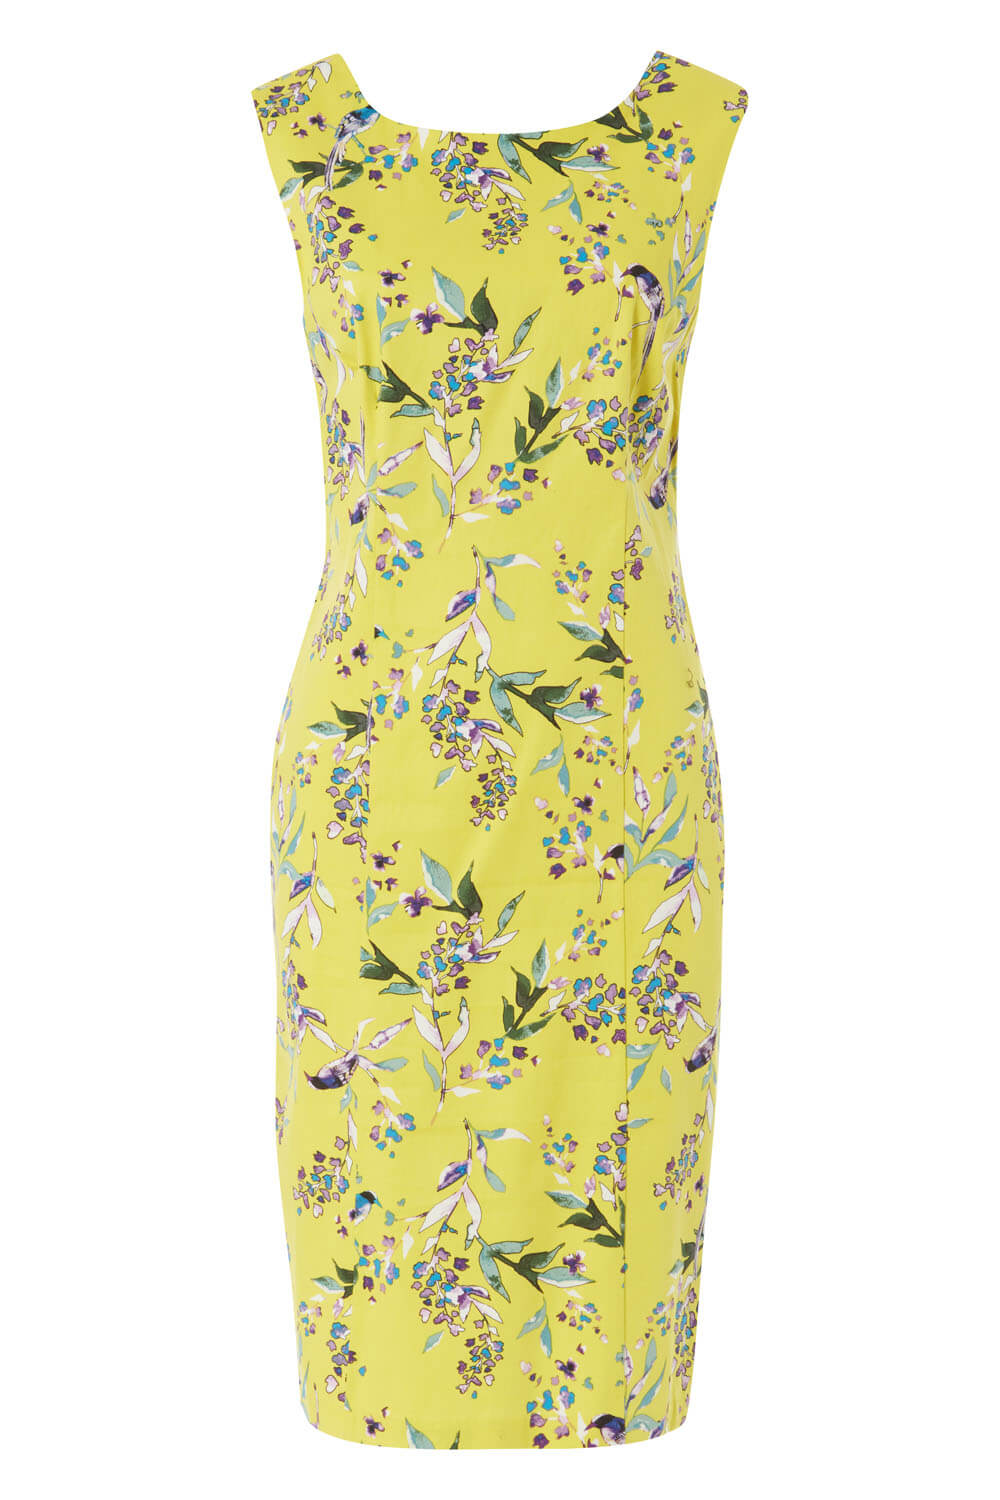 Floral Print Sleeveless Shift Dress in Lime - Roman Originals UK